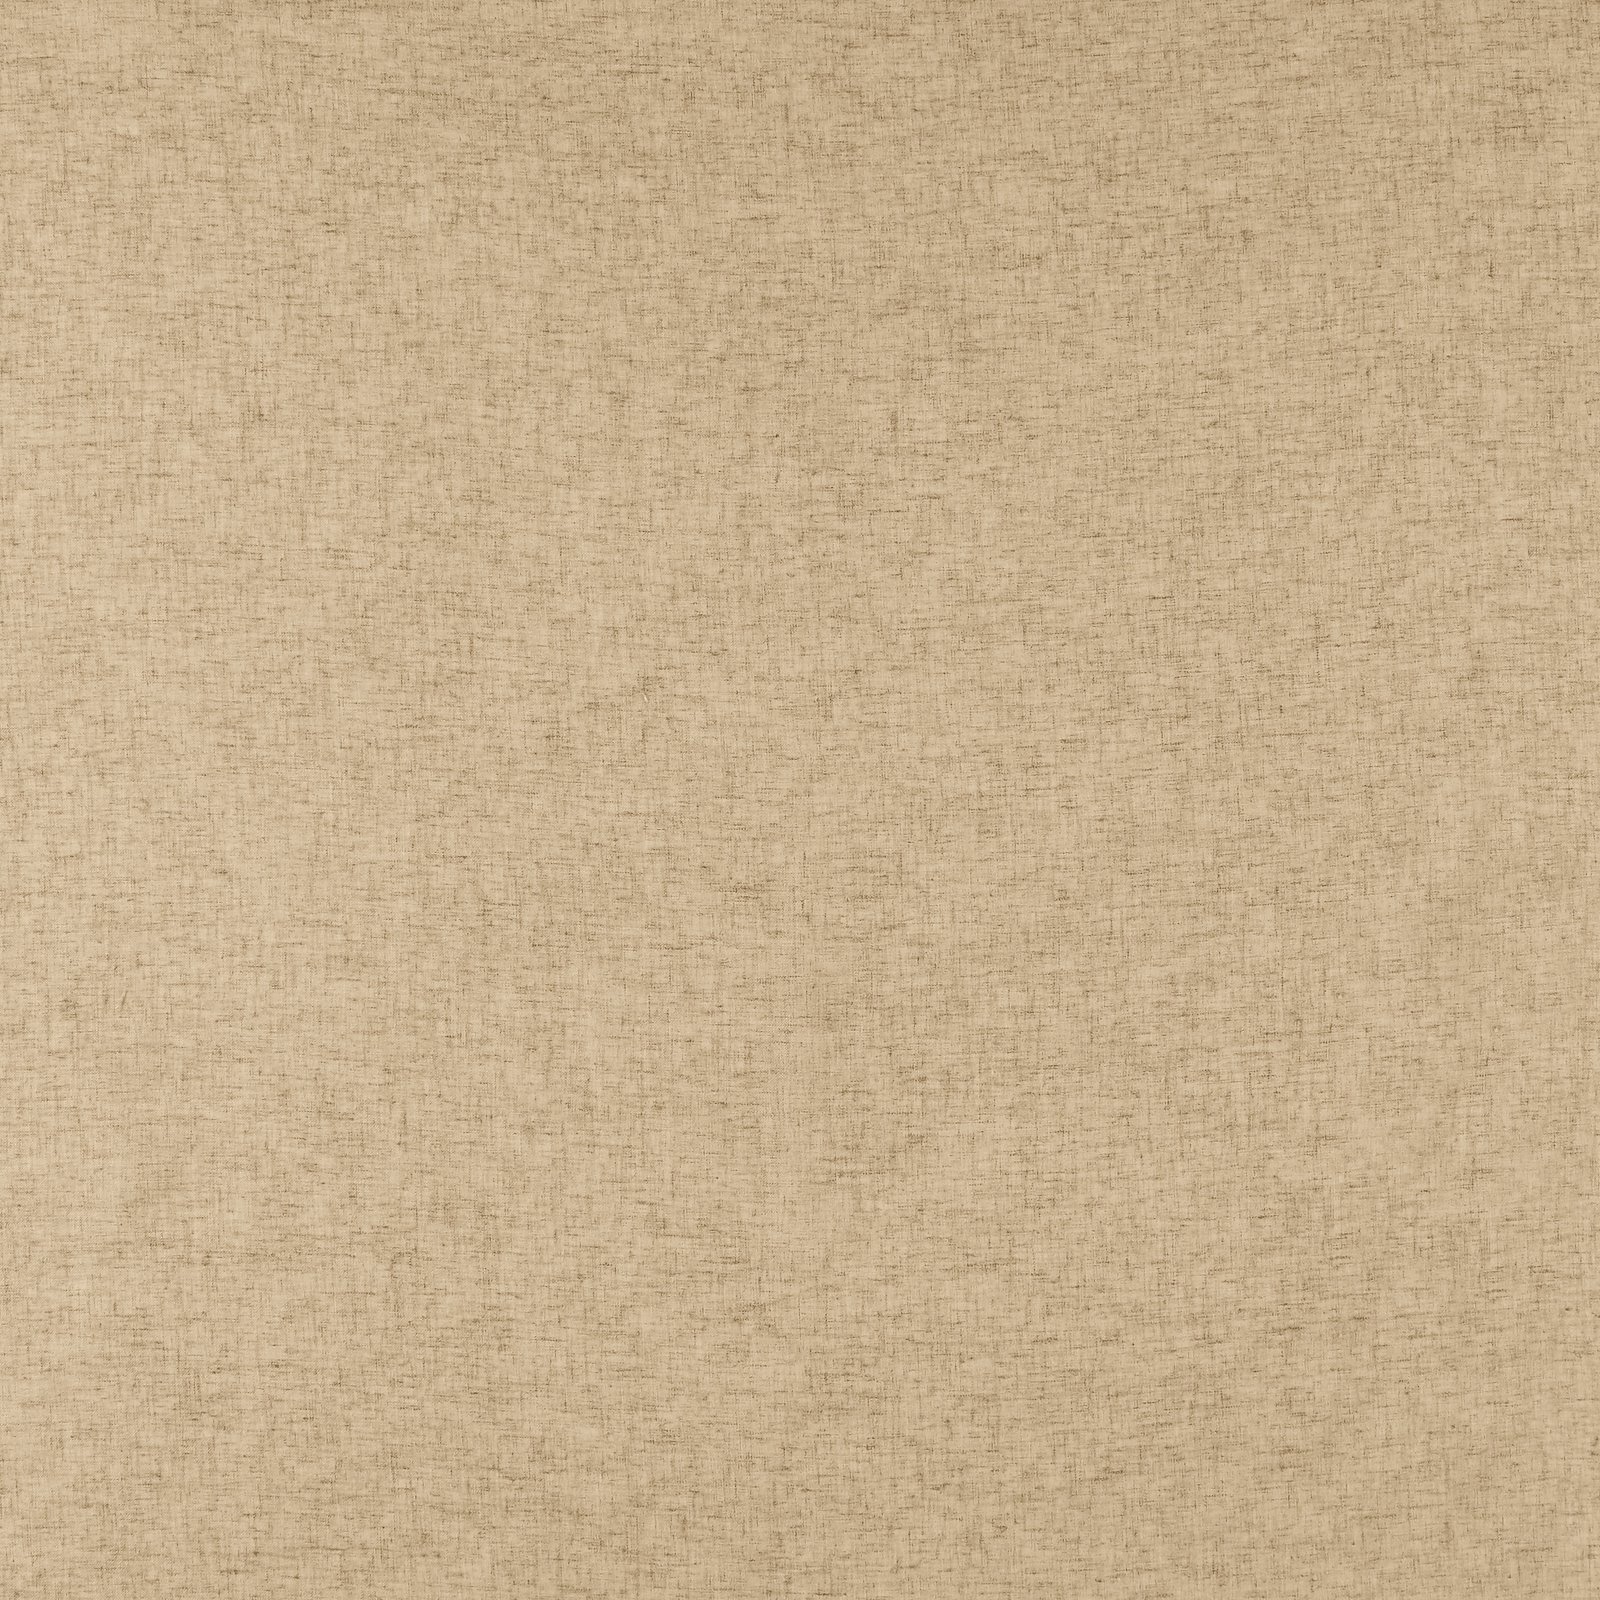 Voile beige polyester/linen blend 835174_pack_solid